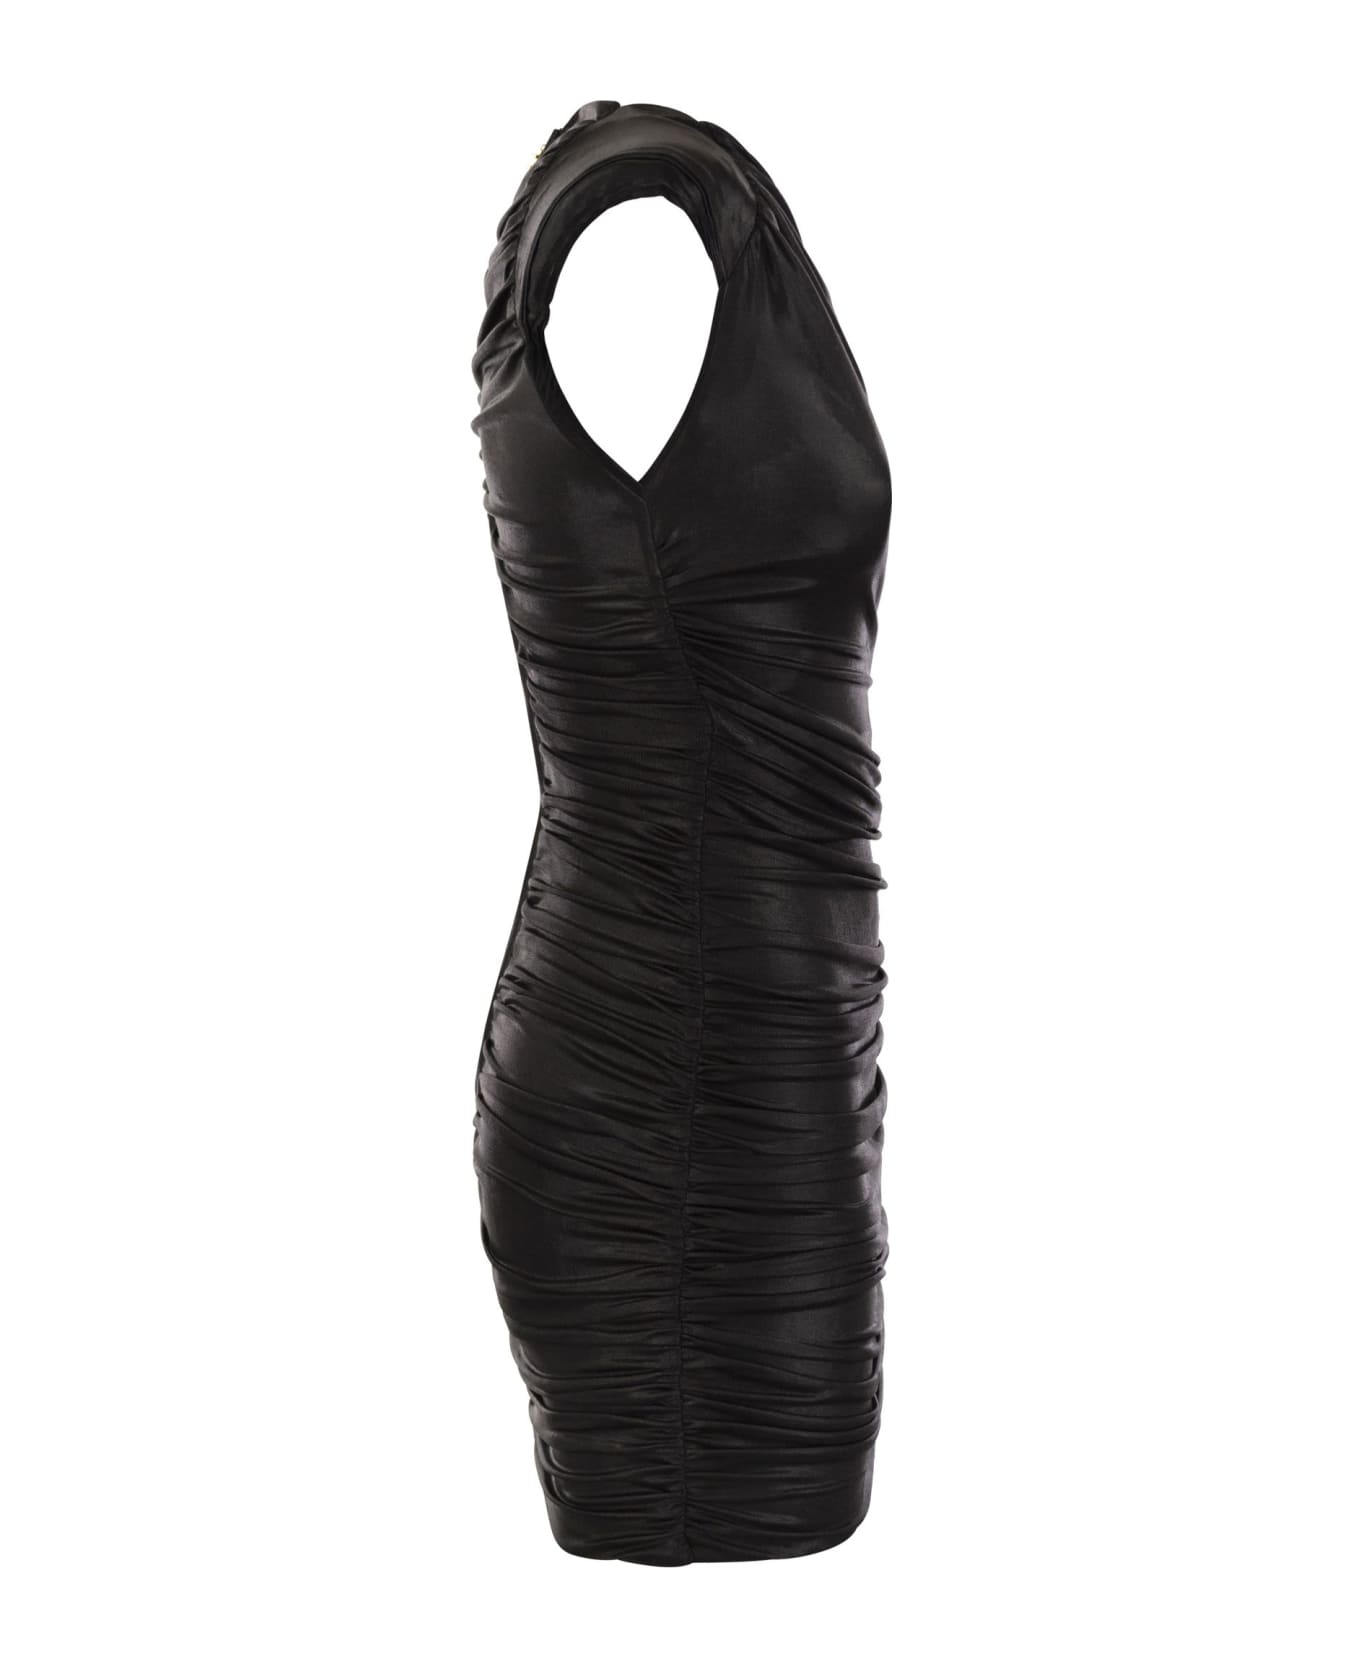 Elisabetta Franchi Draped Metallic Jersey Minidress - Black